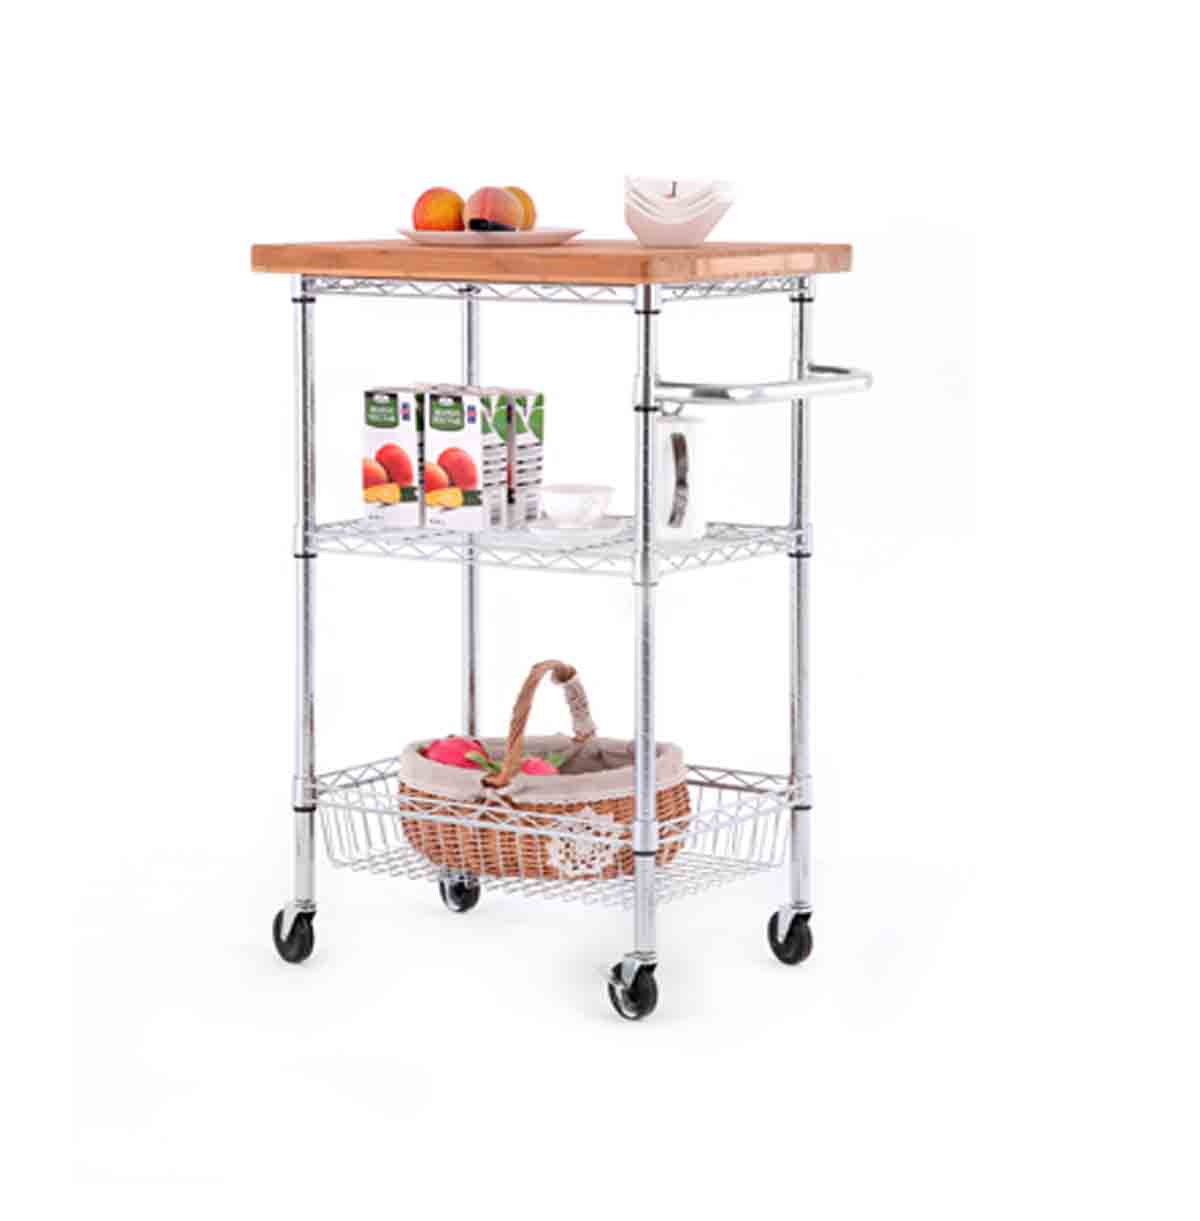 Garage Chrome Wire Shelf Trolleys / Storage Microwave Rack Cart With Wood Top